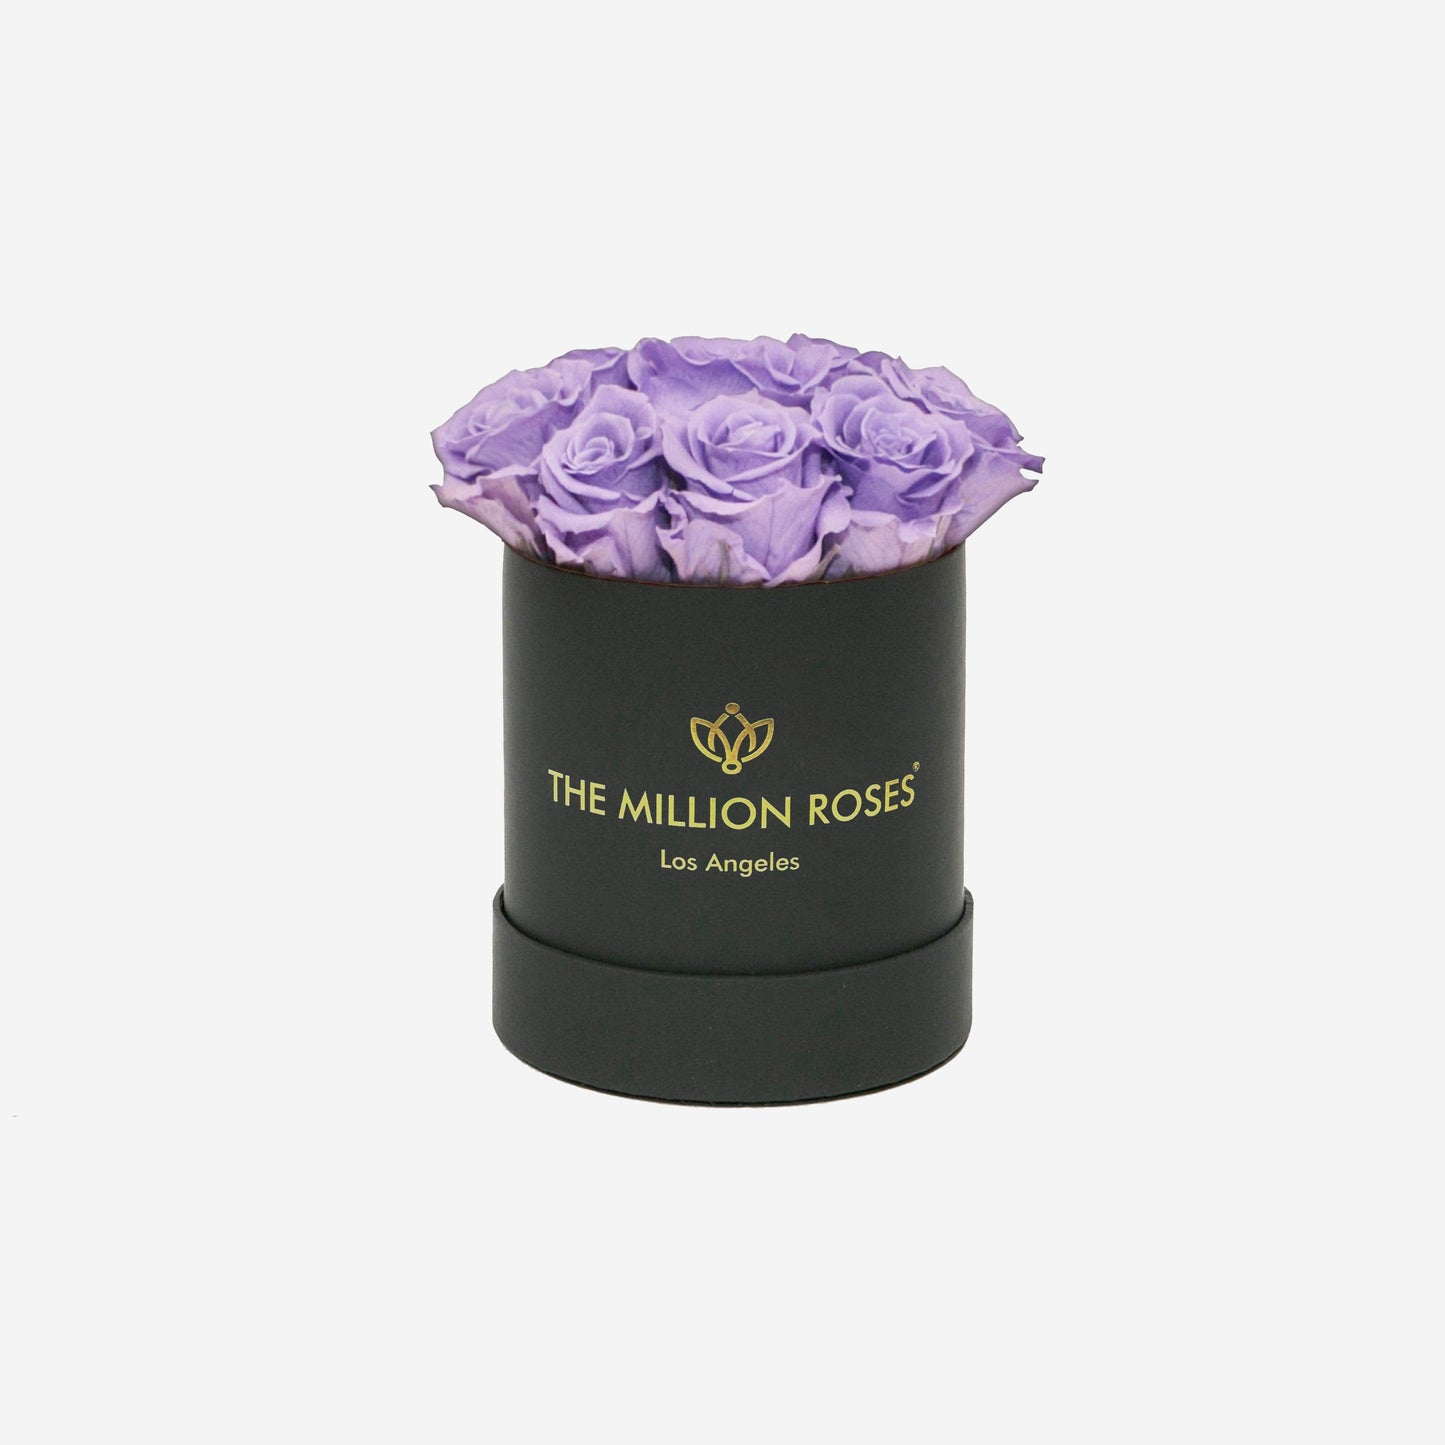 Basic Black Box | Lavender Roses - The Million Roses